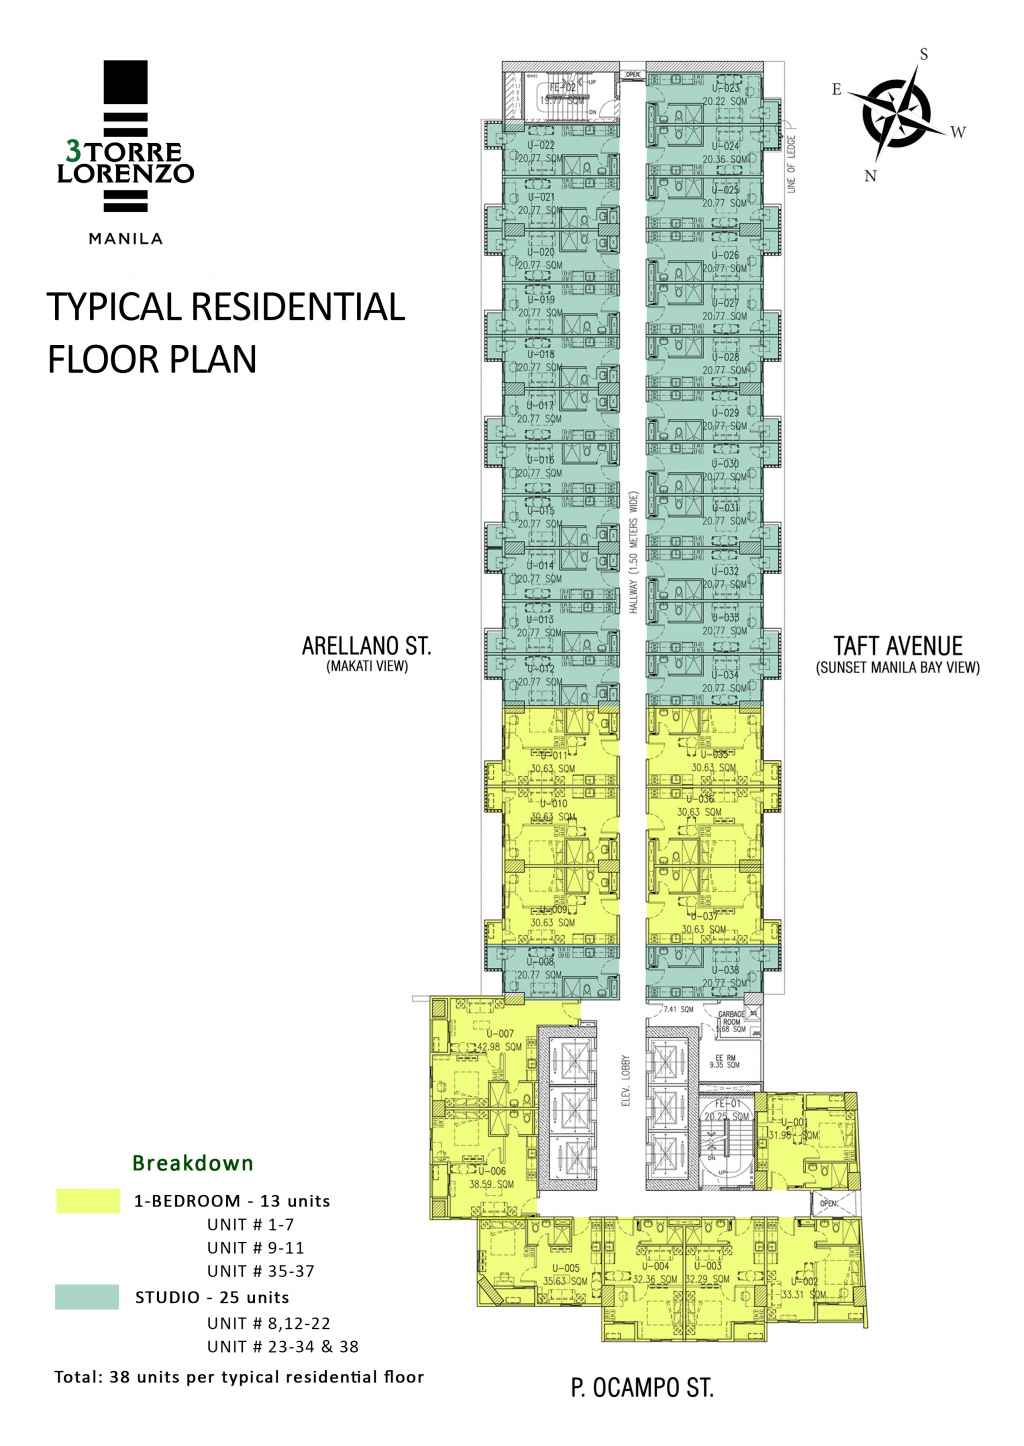 Typical Residential Floor Plan of 3Torre Lorenzo